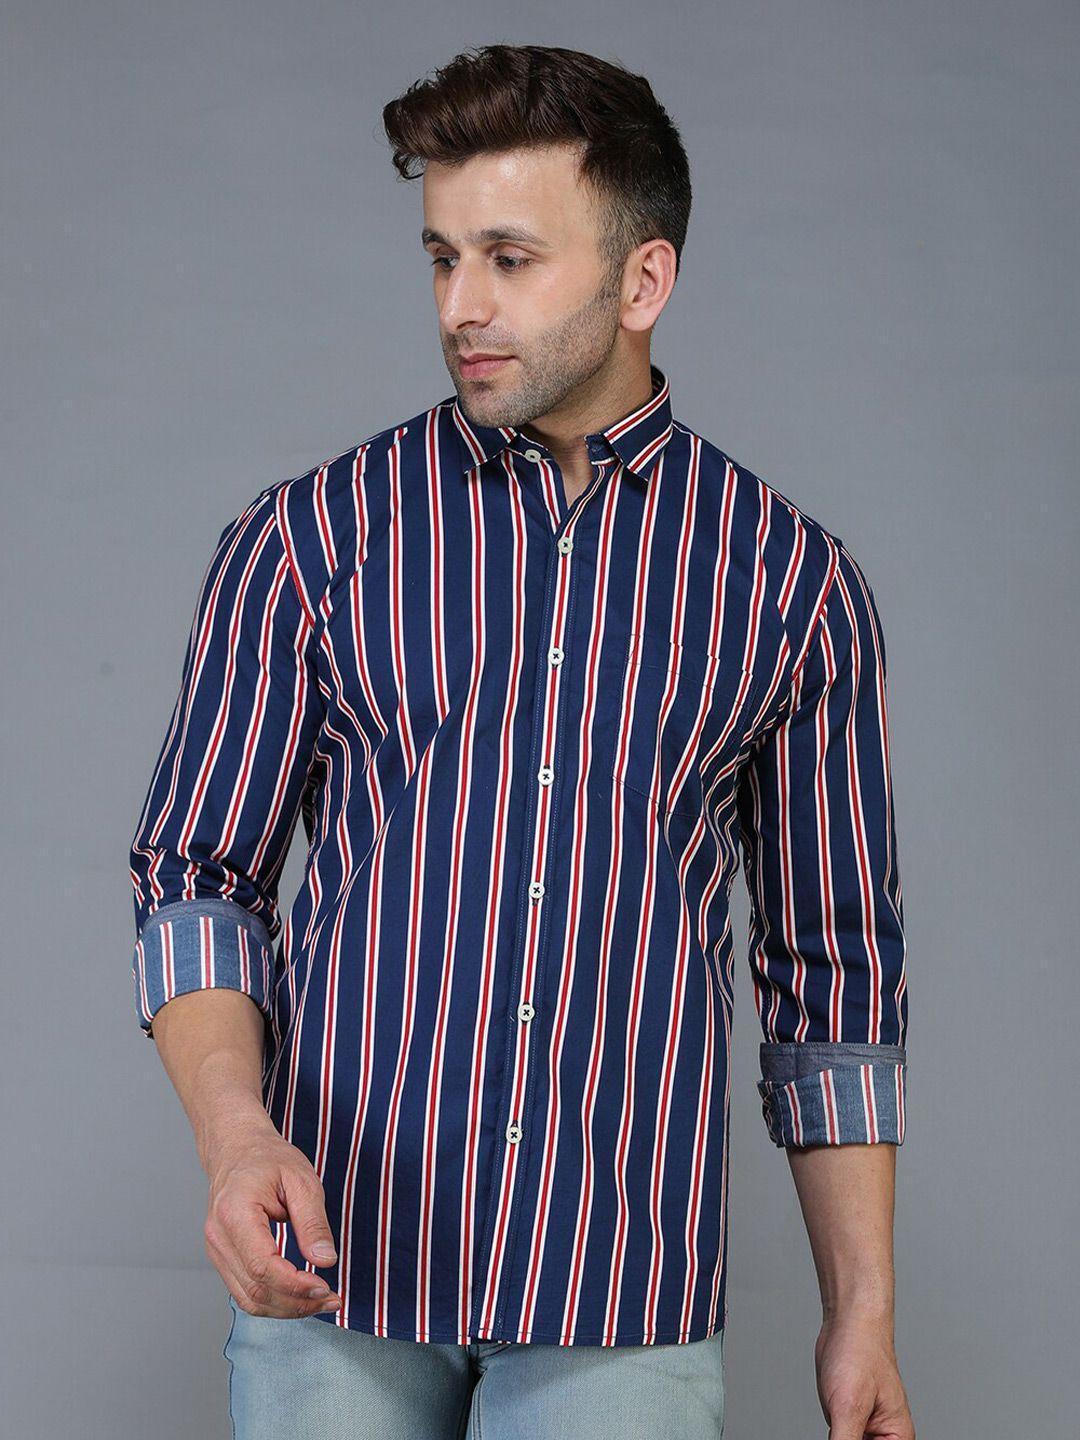 tqs men navy blue standard striped casual shirt